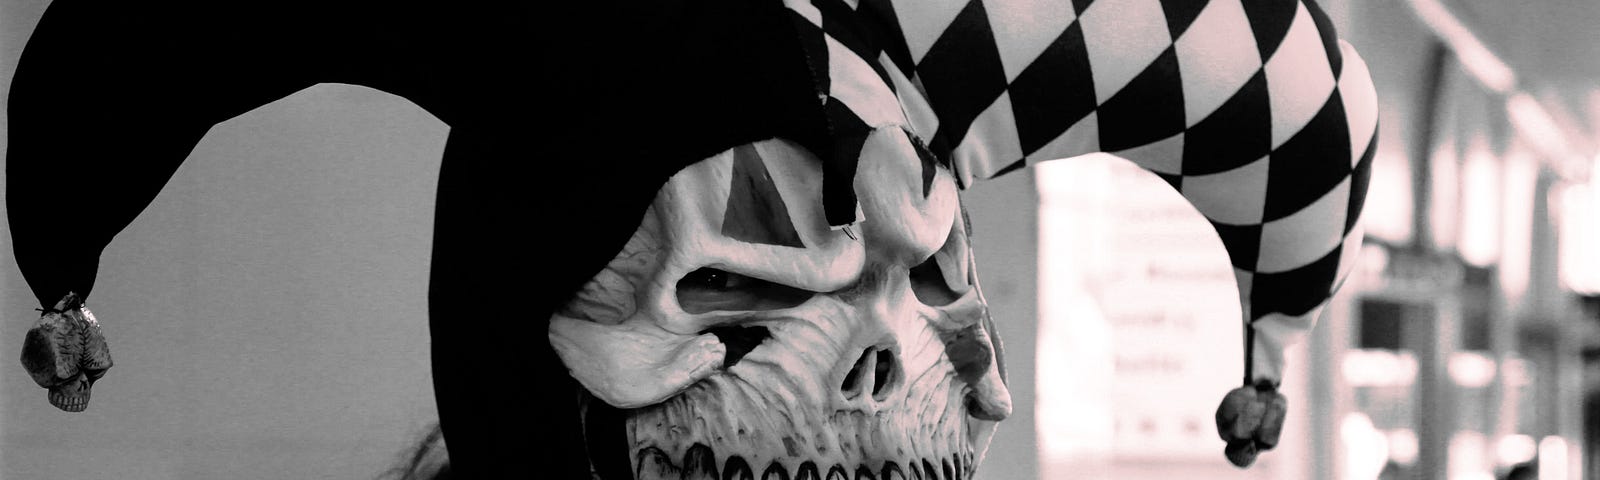 Terrifying skeleton clown in black and white jester costume